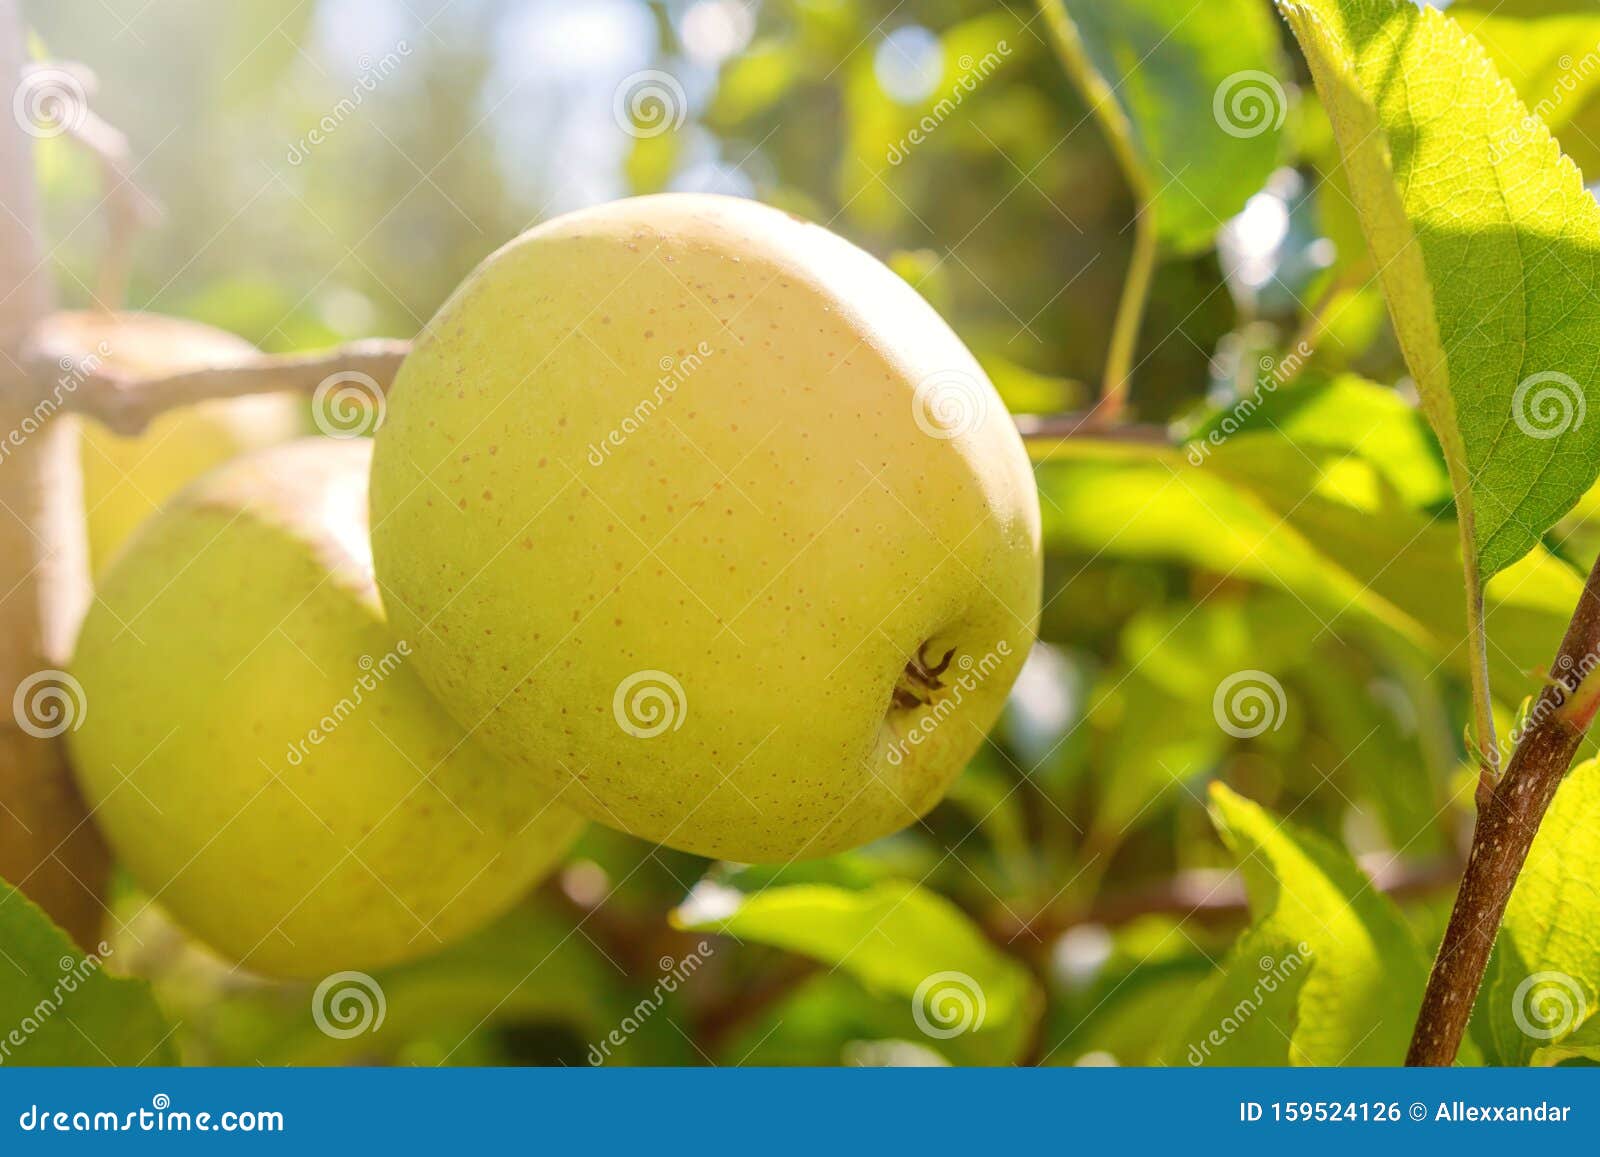 yellow ripe applesÃÂ in orchard,ÃÂ apple tree,ÃÂ golden delicious